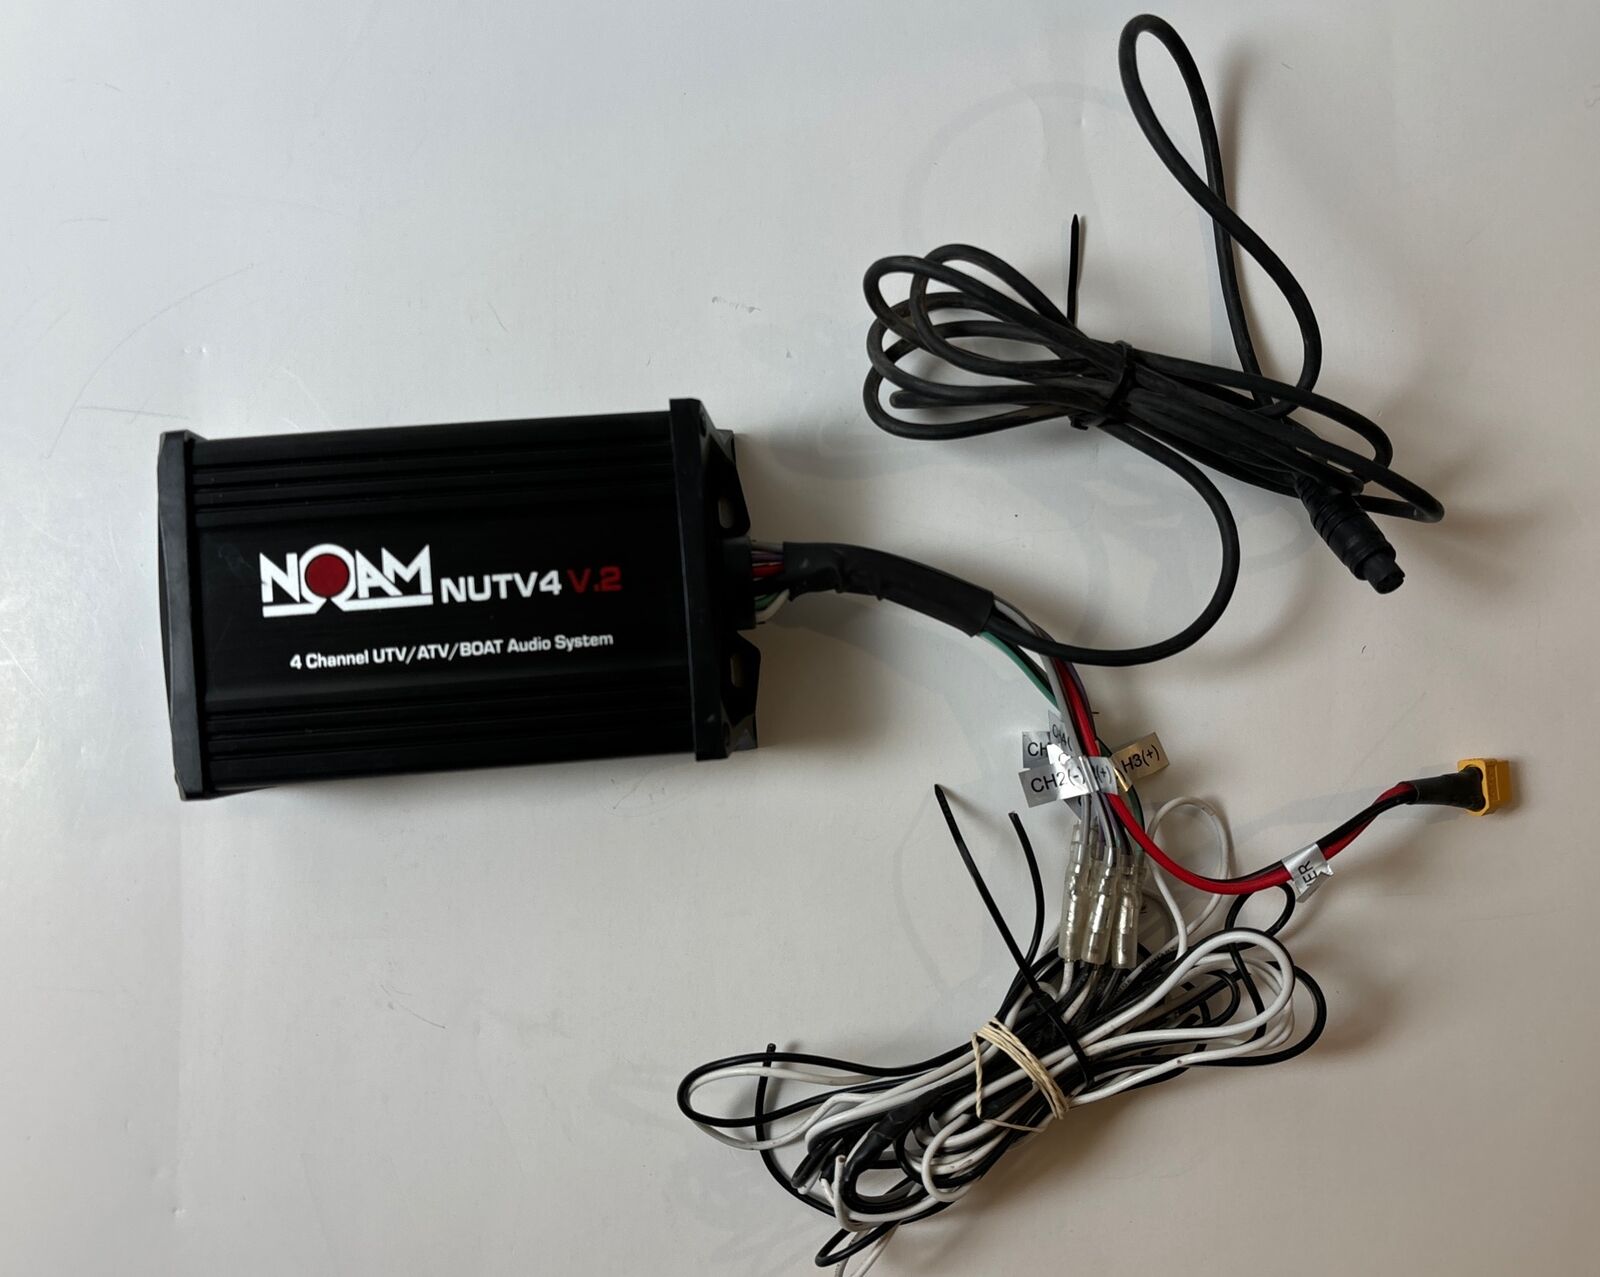 Noam Nutv4 V.2 4 Channel Boat Audio System Amplifier w/Bluetooth 46617